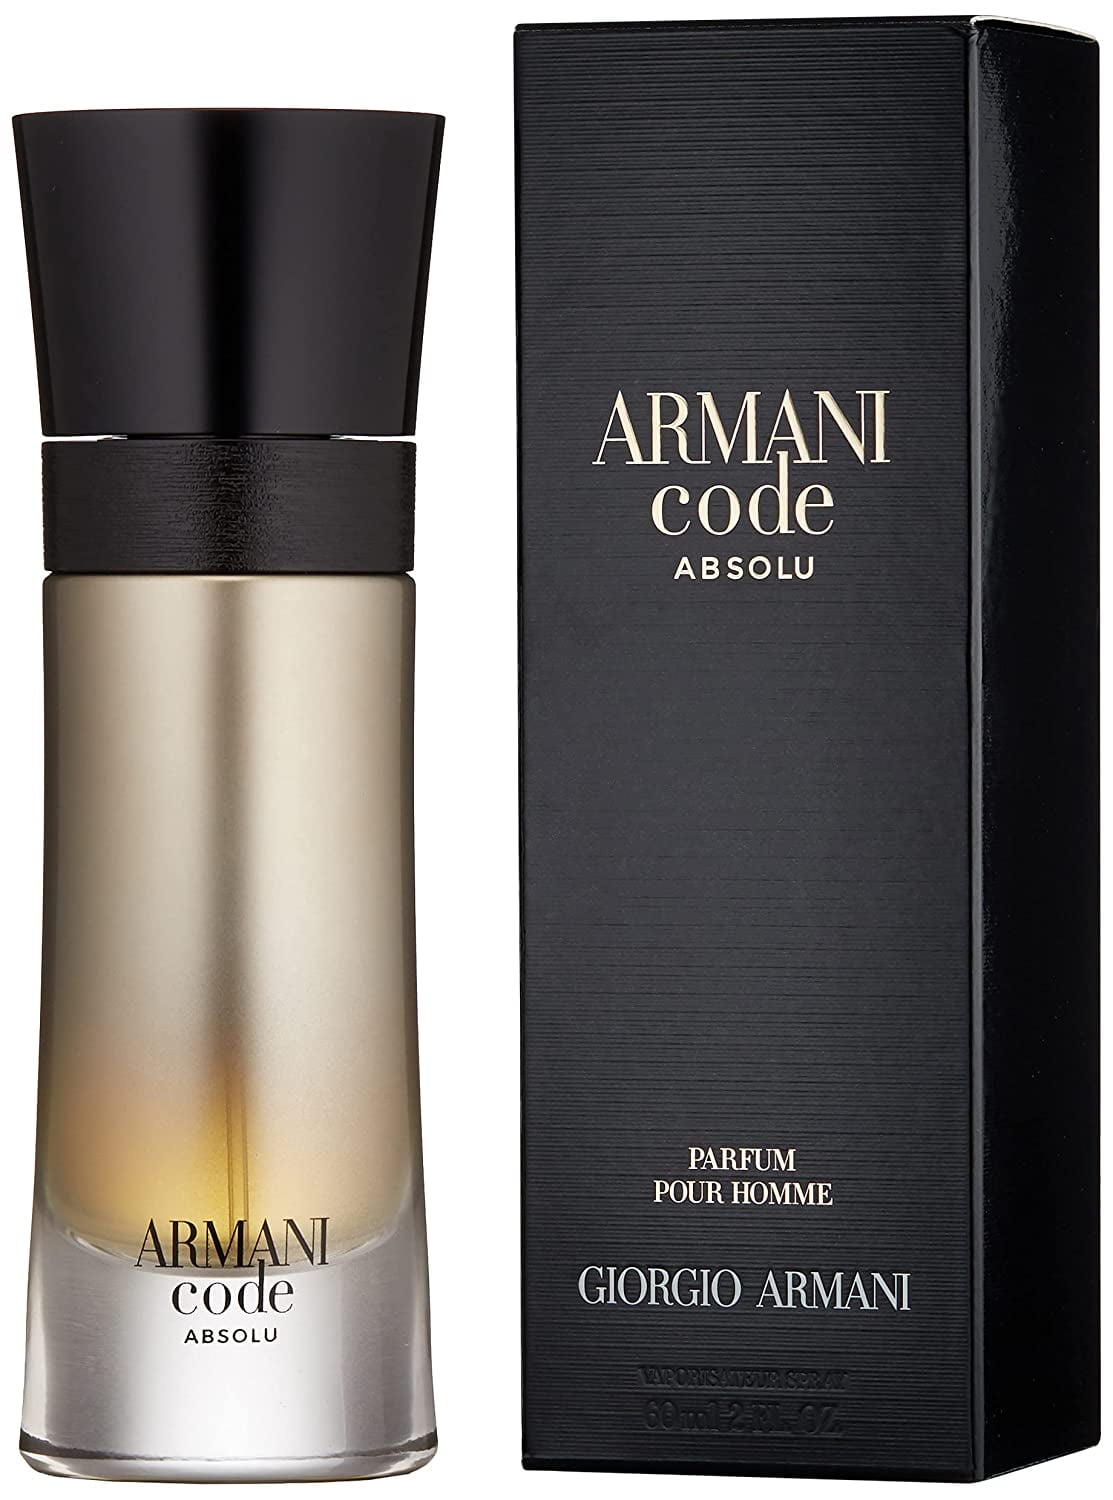 Armani Code Absolu by Giorgio Armani Eau De Parfum Spray 2 oz Men - Walmart.com